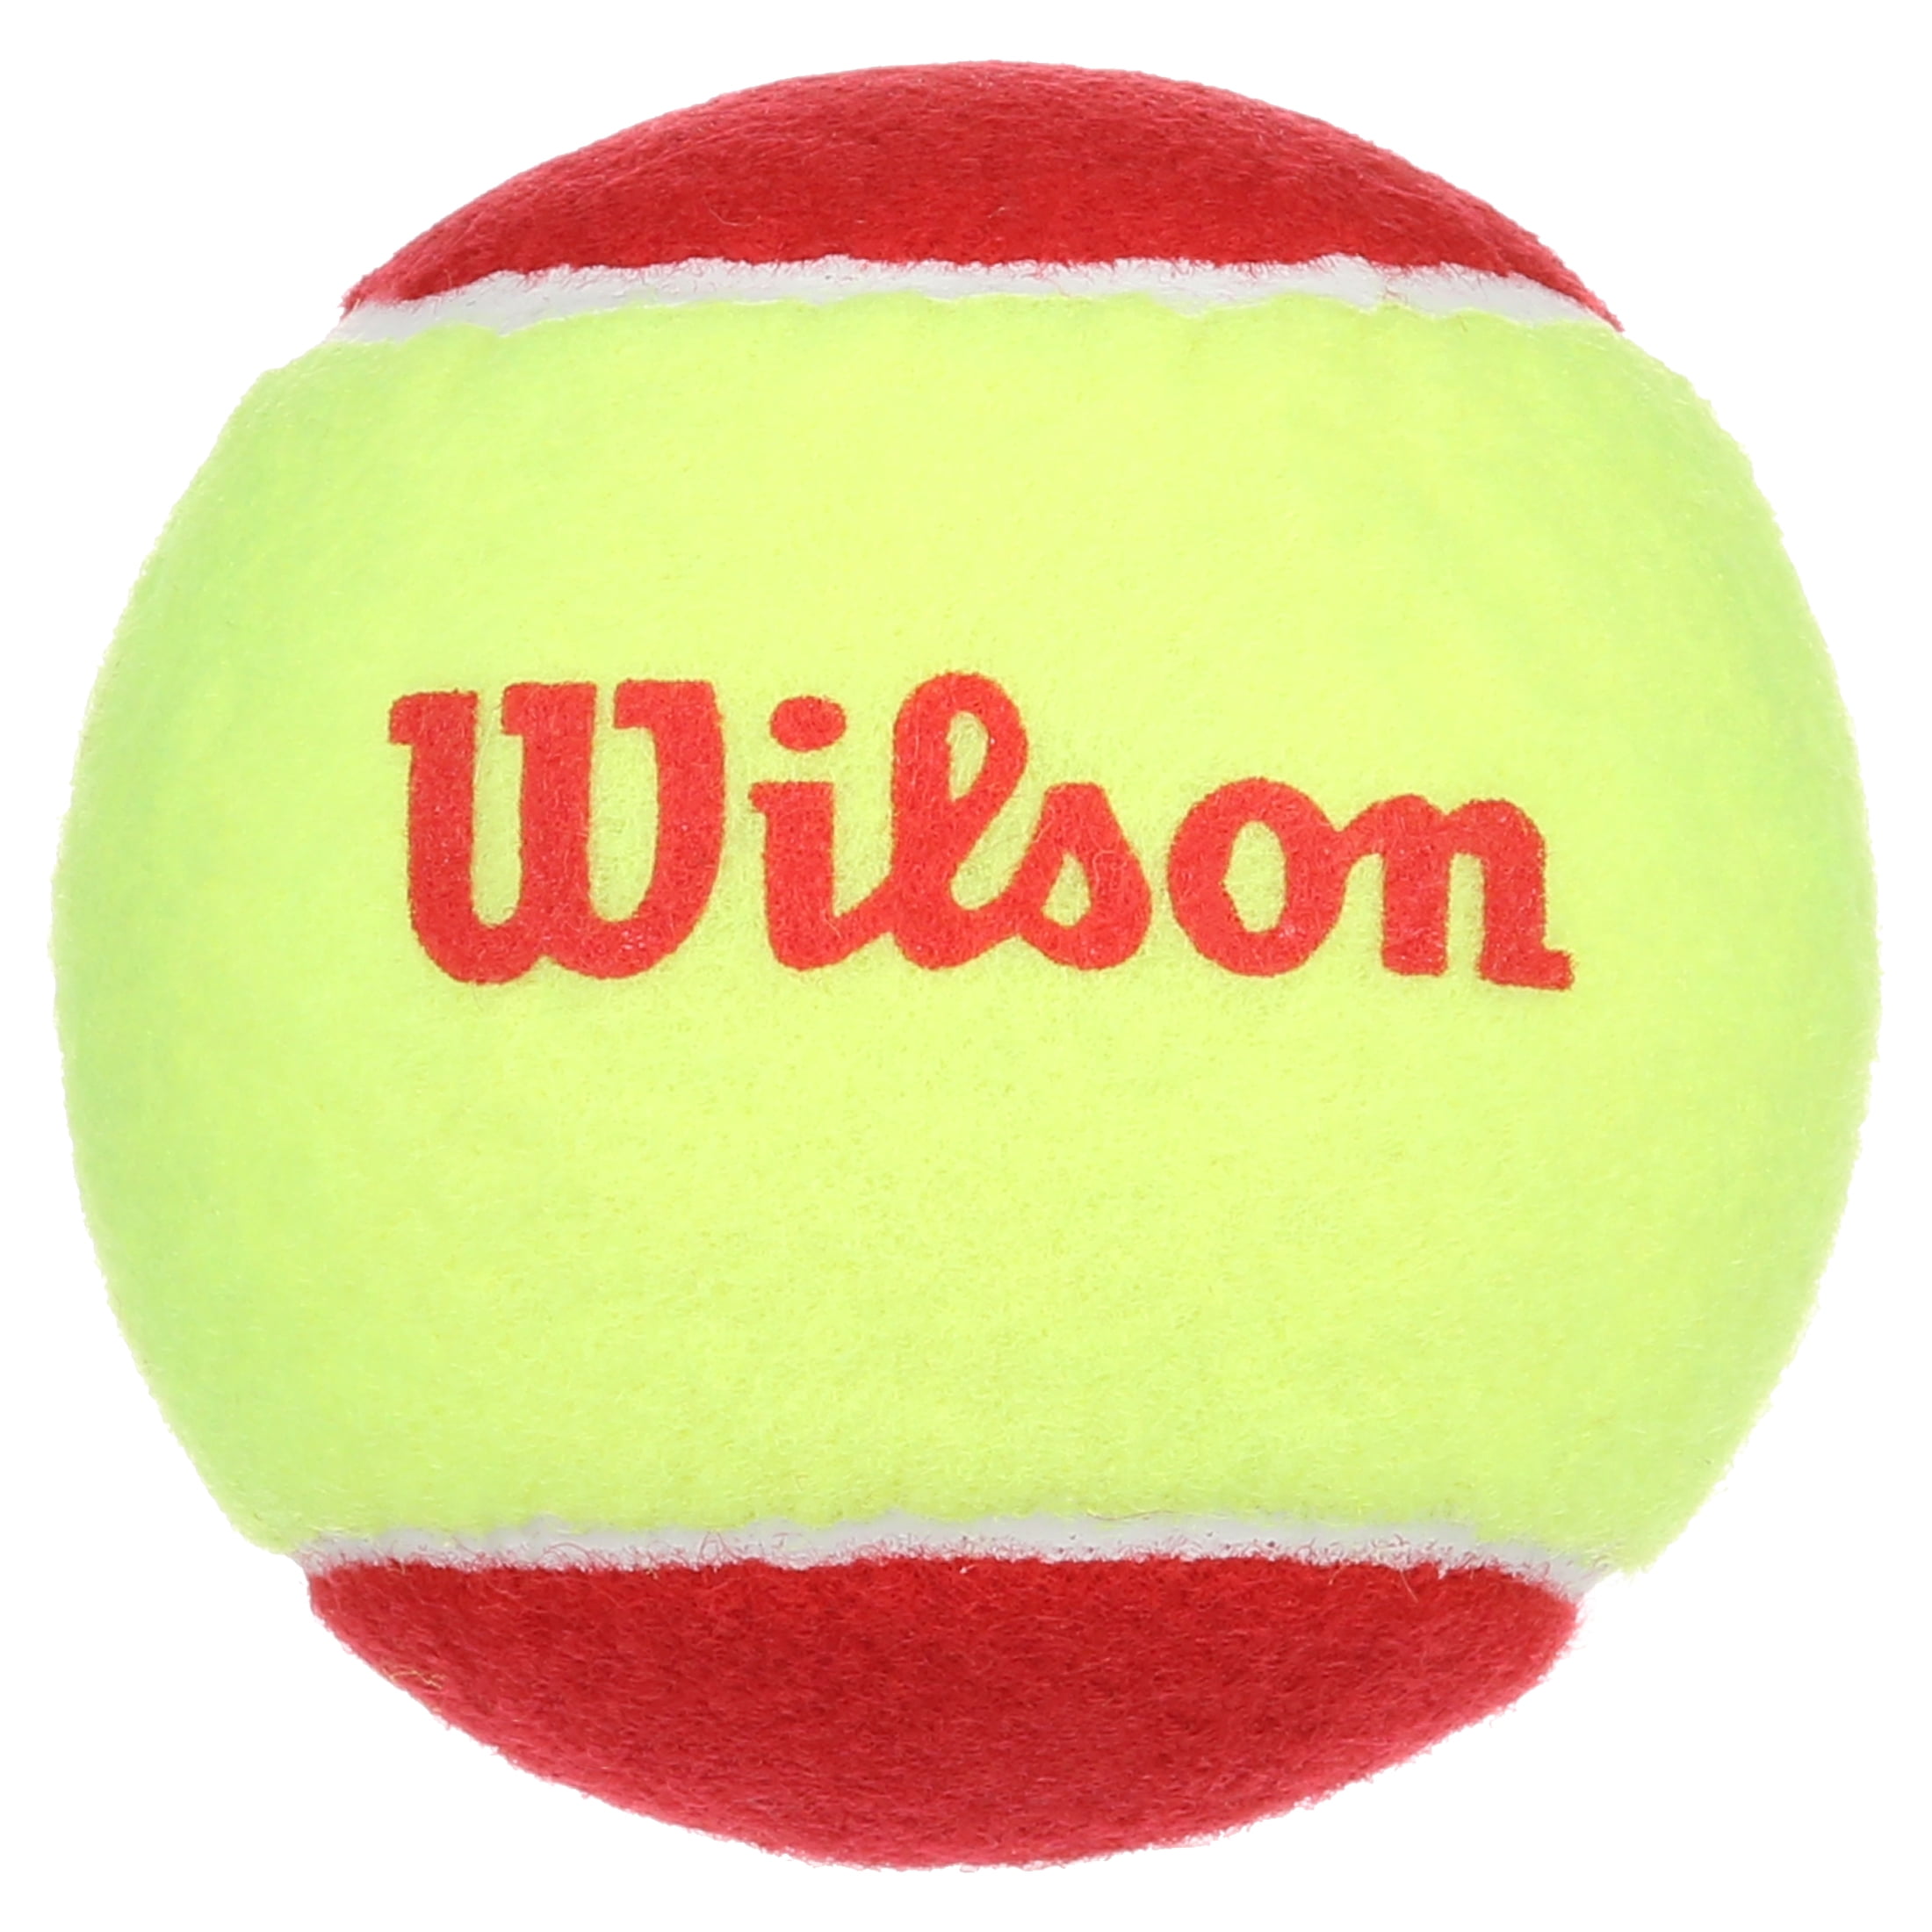 ONE DOZEN BALLS free post WILSON MINI BIG RED TENNIS BALL JUNIOR TENNIS BALLS 